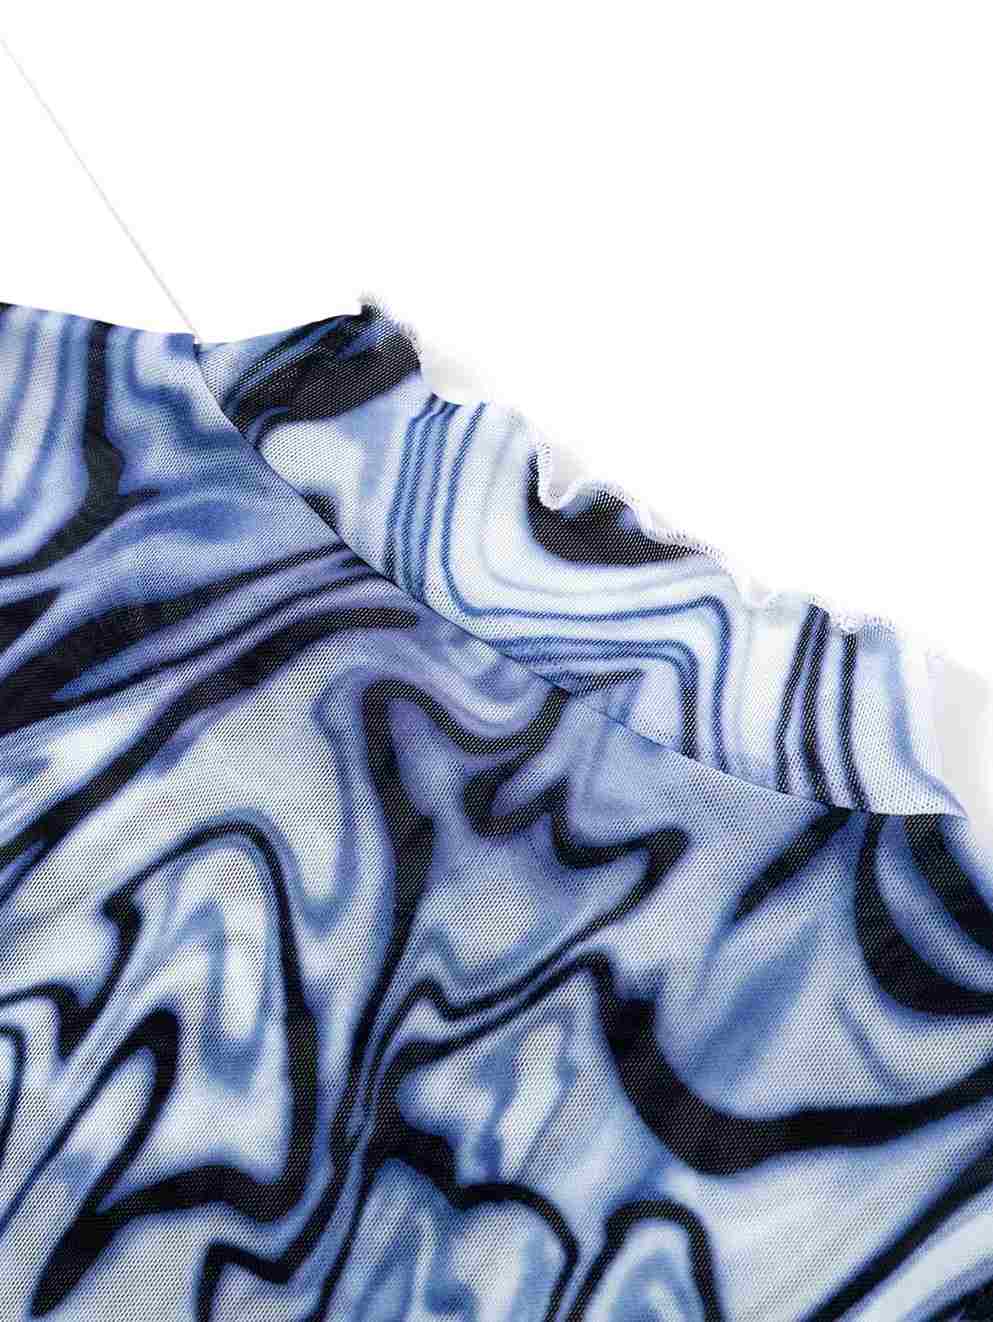 Blackpink Jennie-inspired Water Print Bodycon Dress